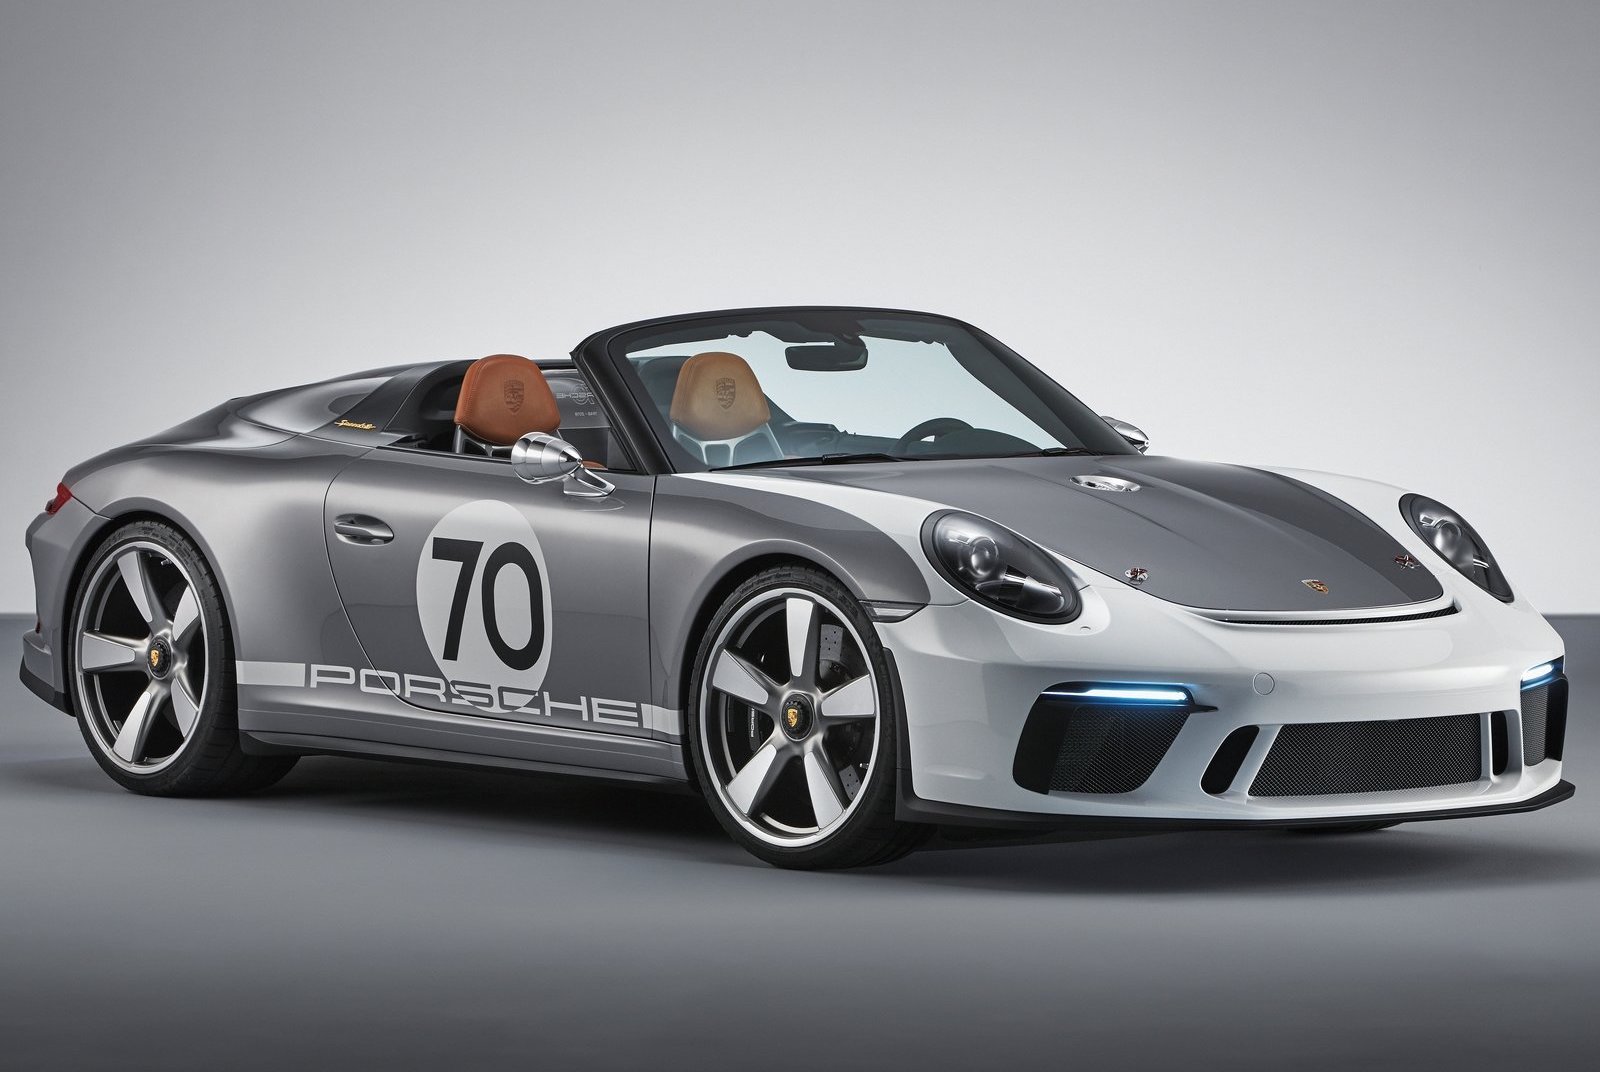 Porsche 911 Speedster Concept revealed for 70th anniversary